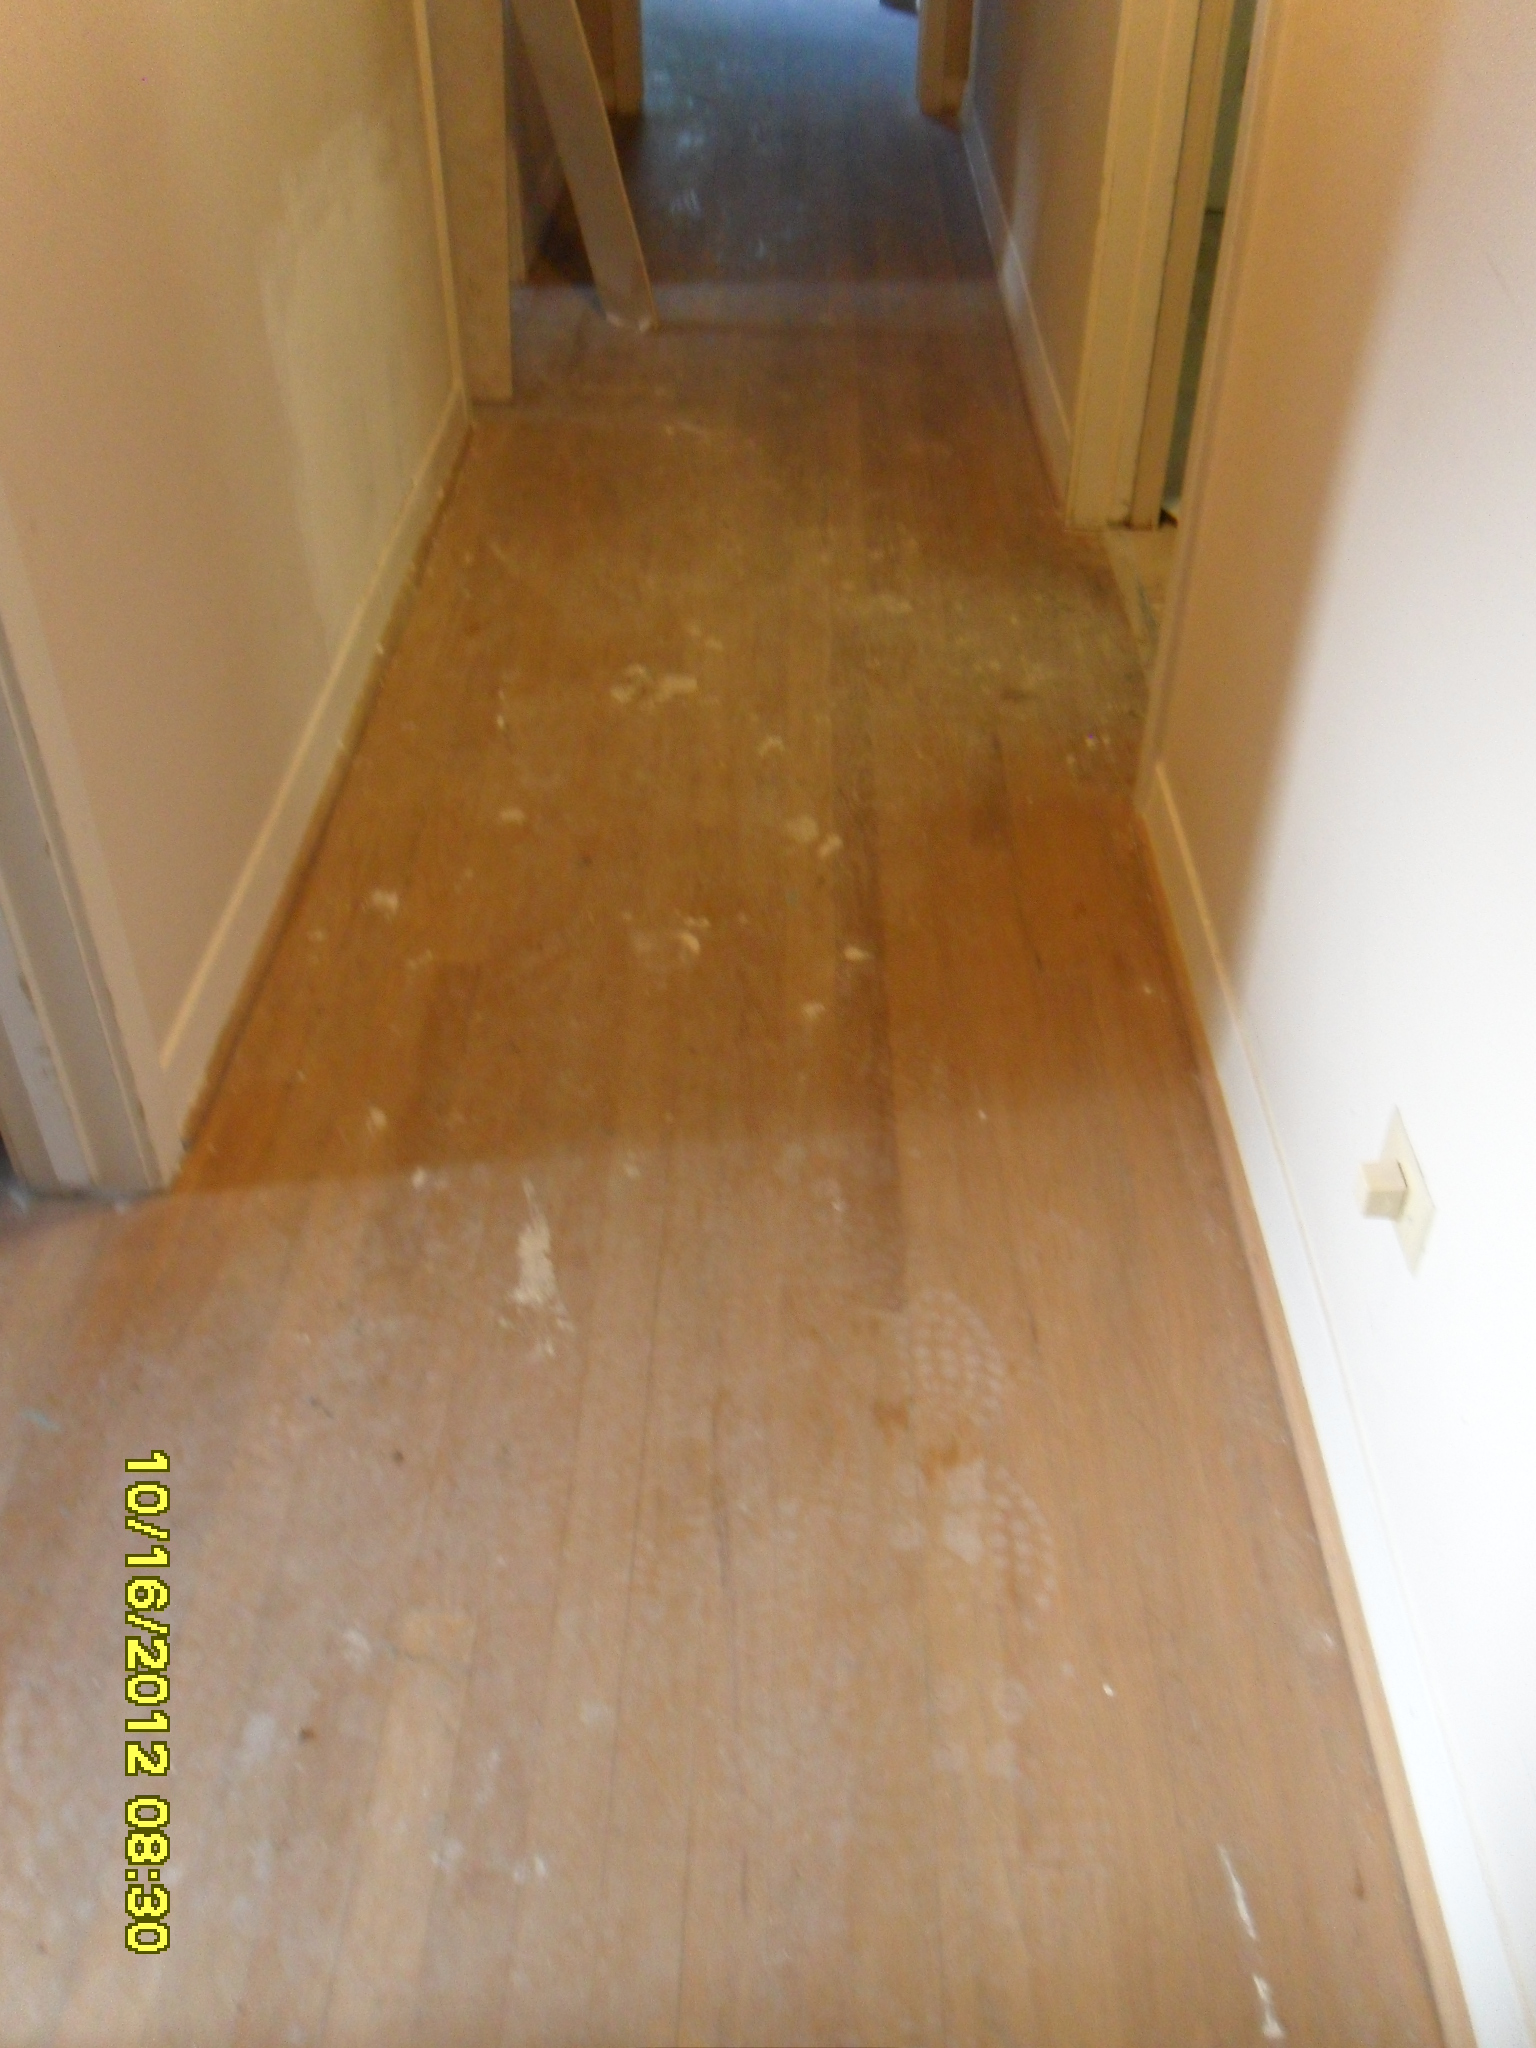 hardwood floors were not protected